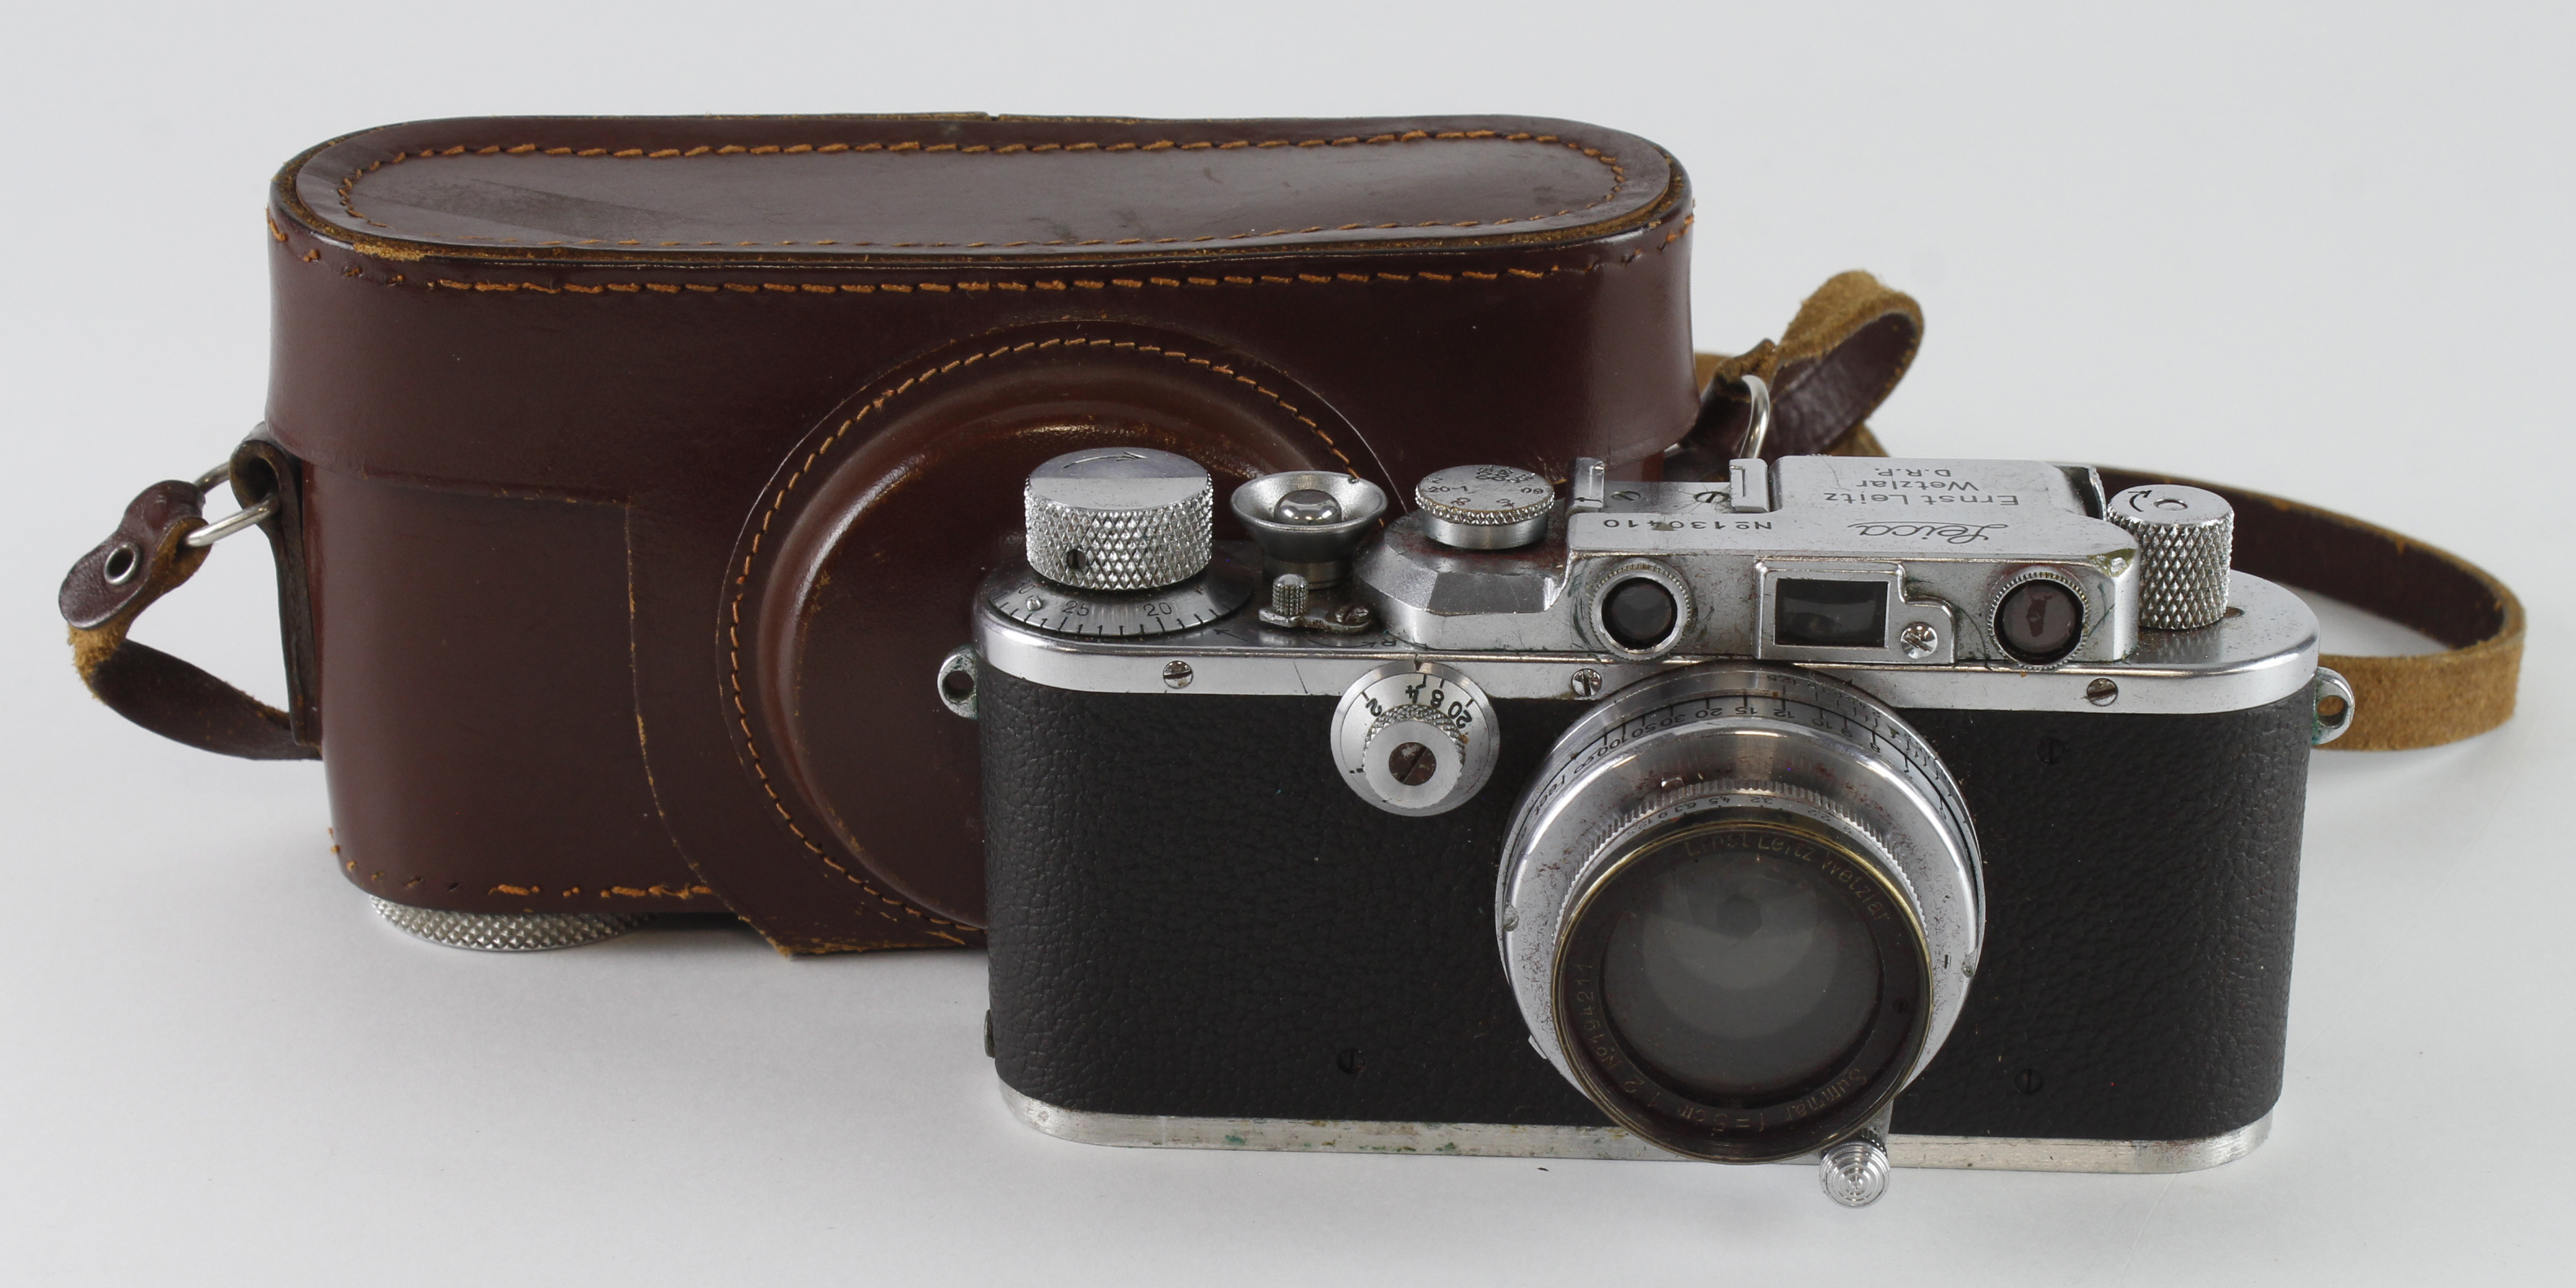 Leica IIIa Rangefinder camera (no. 130410), with Summar f=5cm 1.2 lens (no. 194211), contained in